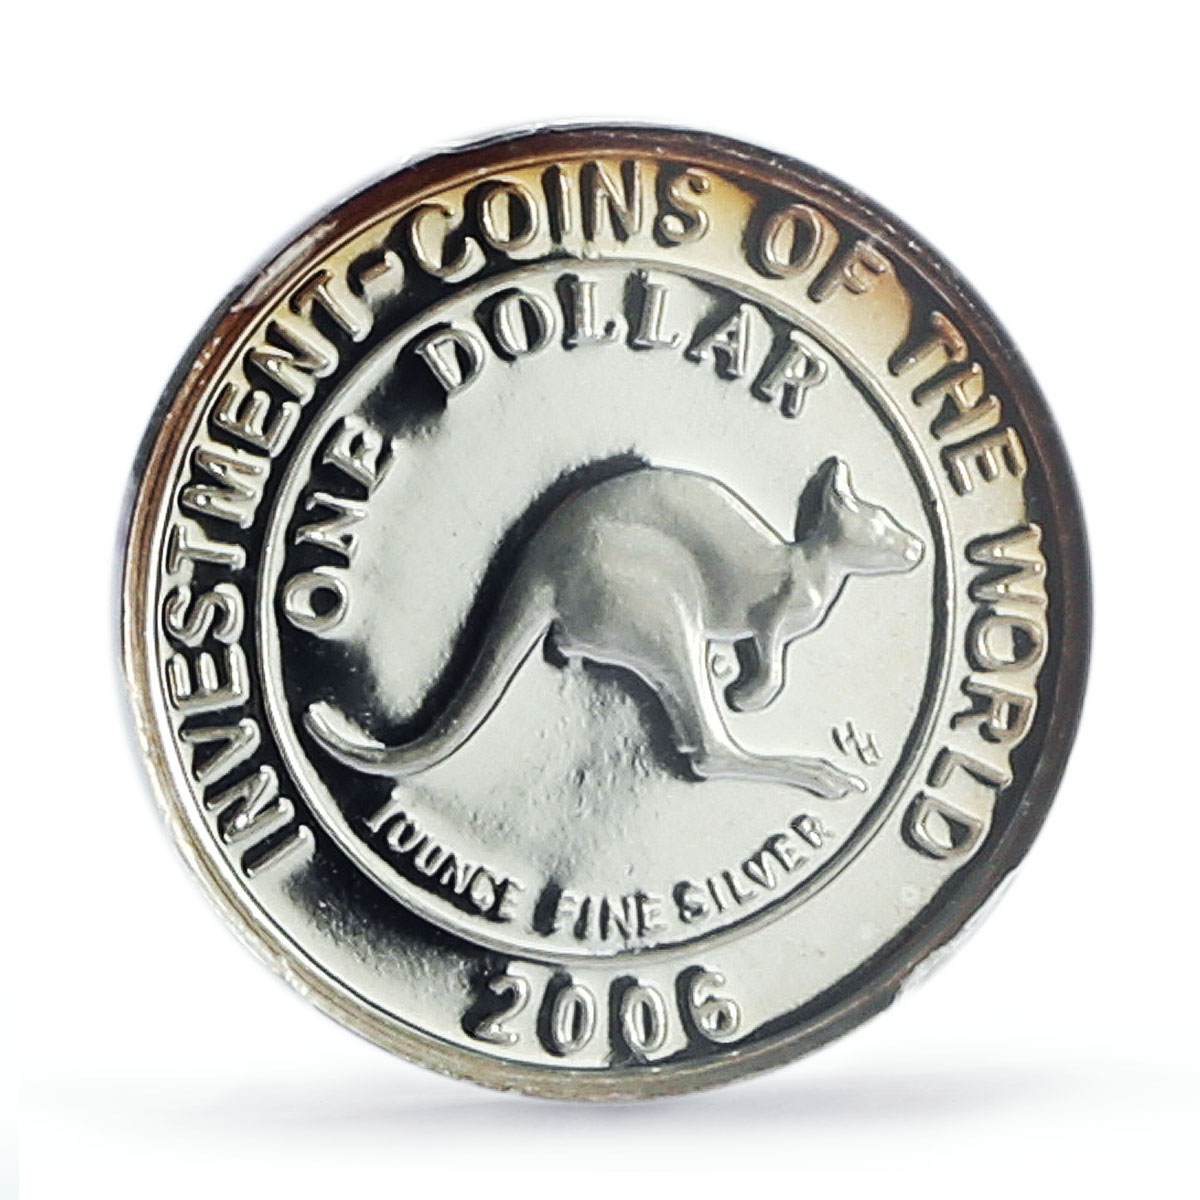 Malawi 5 kwacha Investment Coins Australian Kangaroo PR69 PCGS silver coin 2006